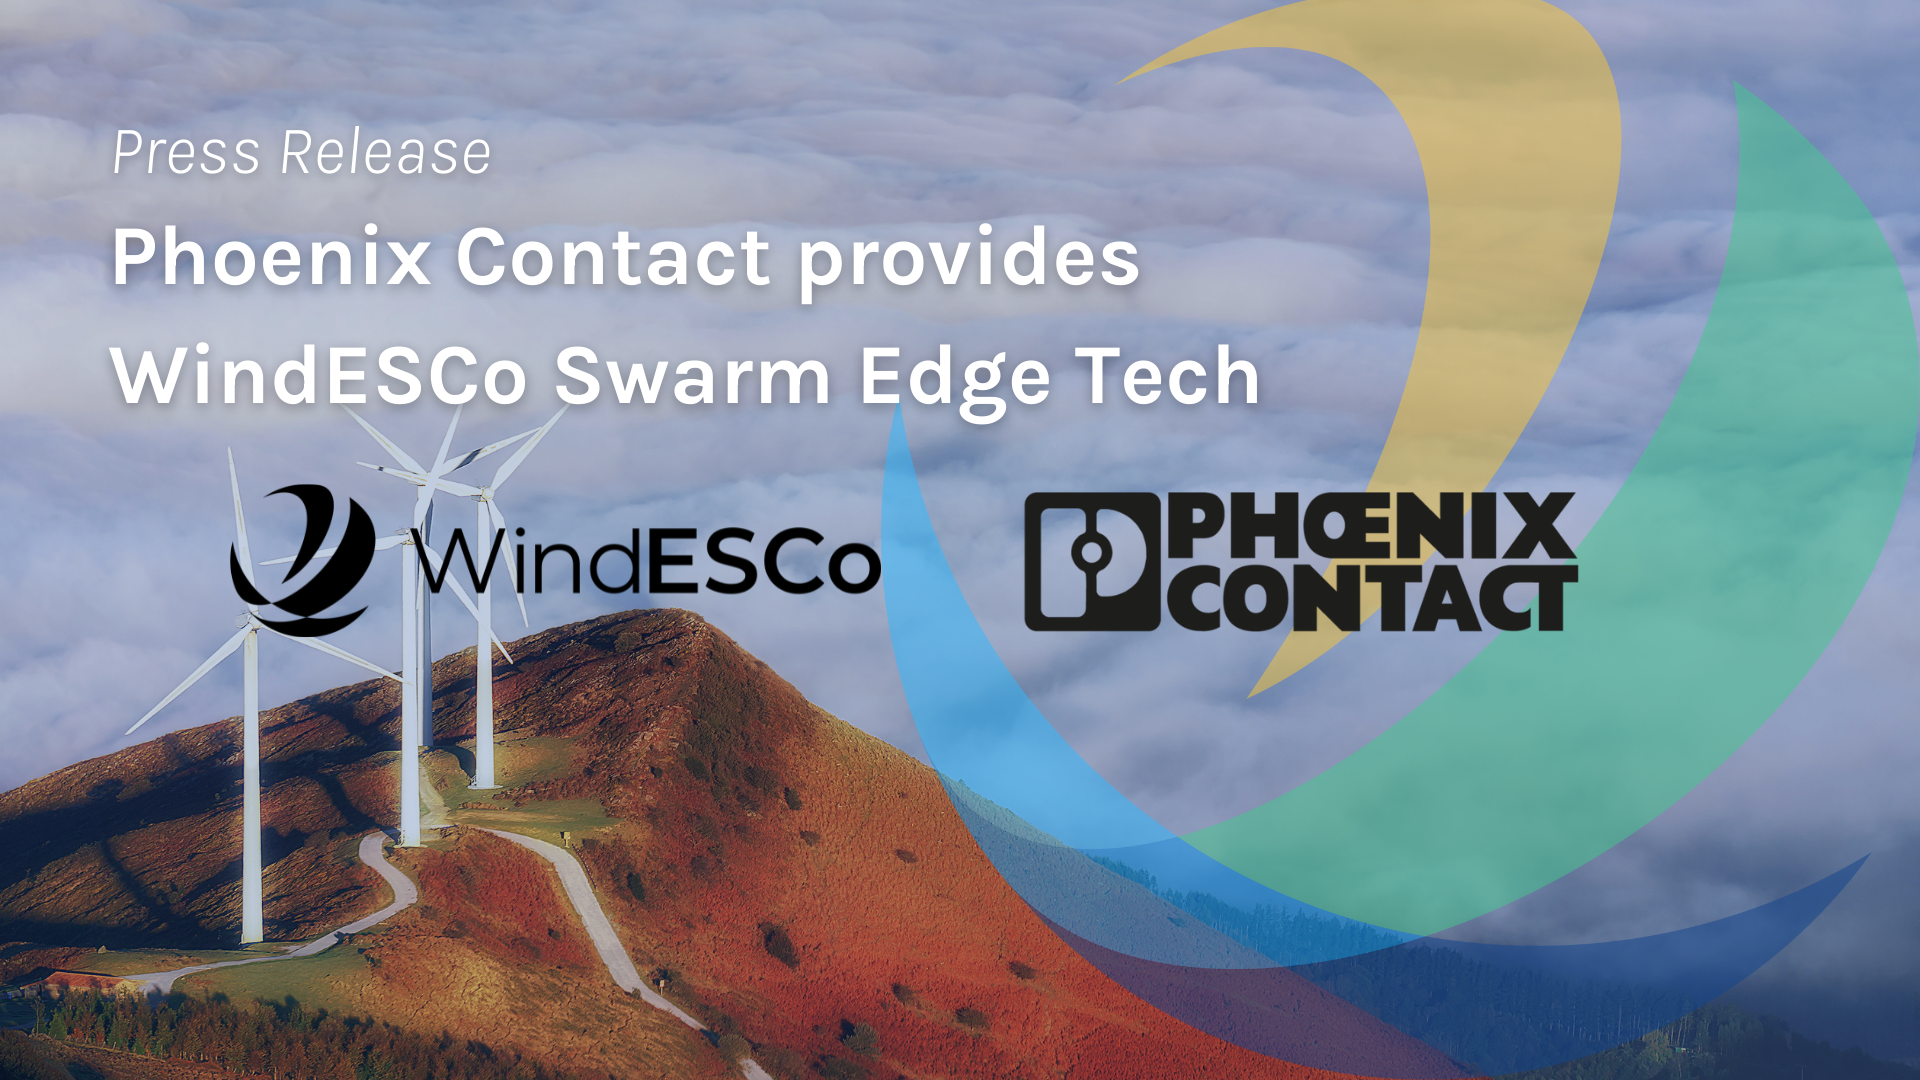 WindESCo Brings Phoenix Contact on Board for Swarm™ Tech